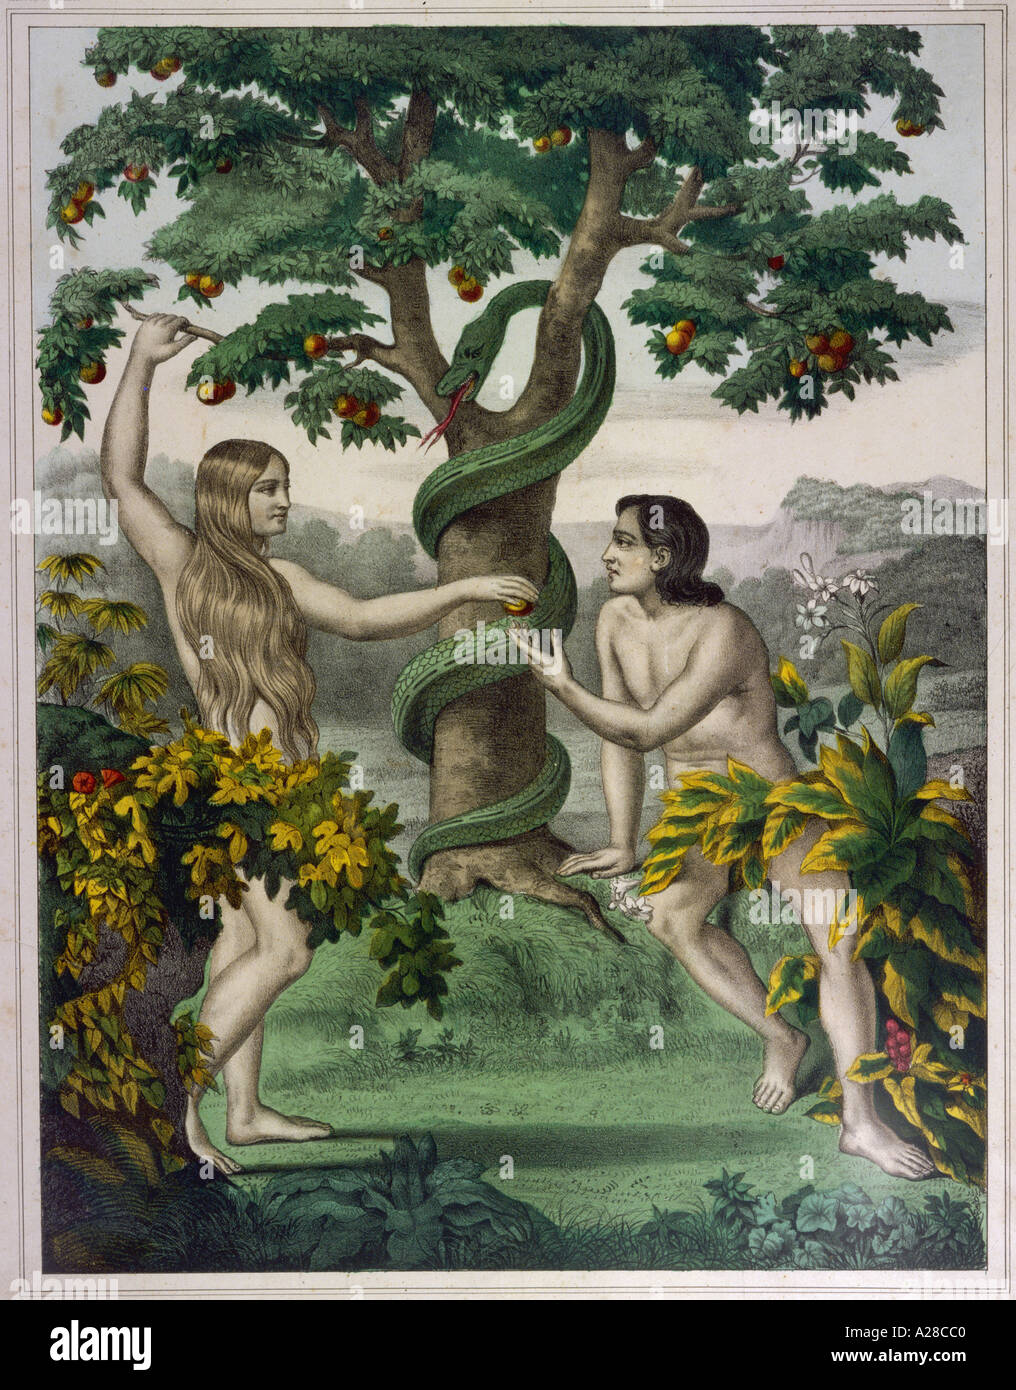 Adam And Eve Tv Show